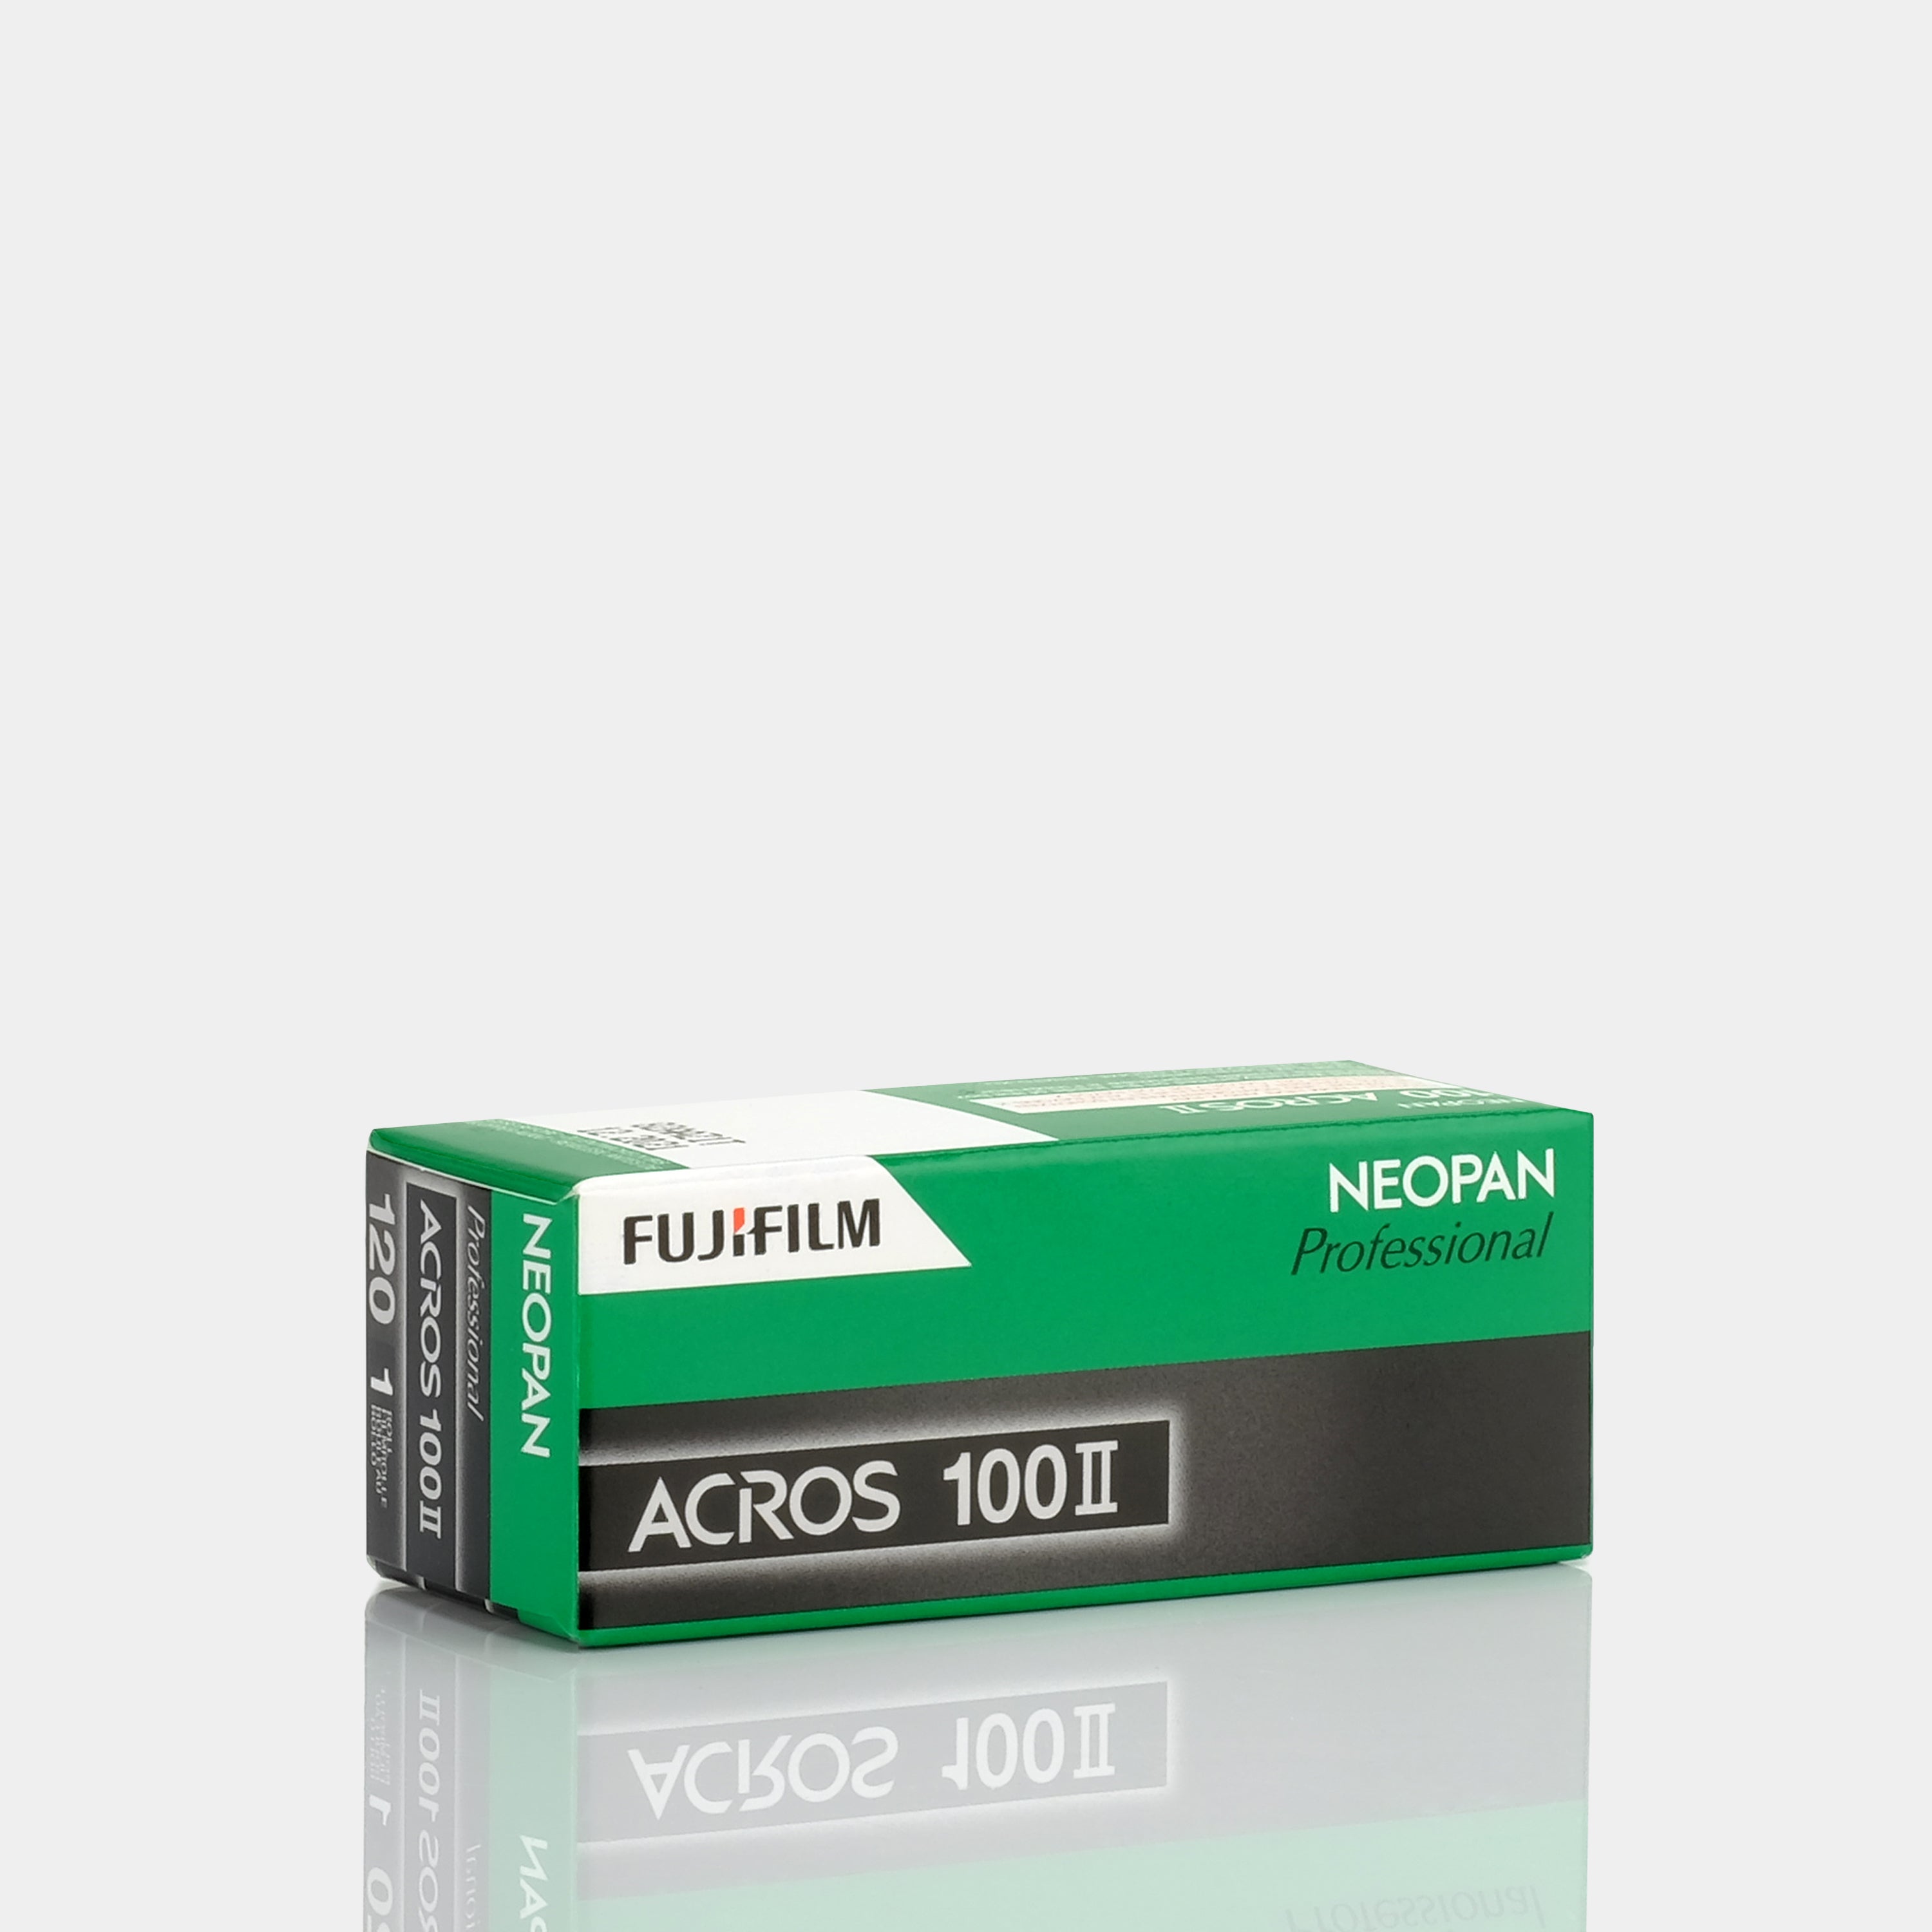 Expired Fujifilm Neopan 100 Acros II Black And White 120 Film